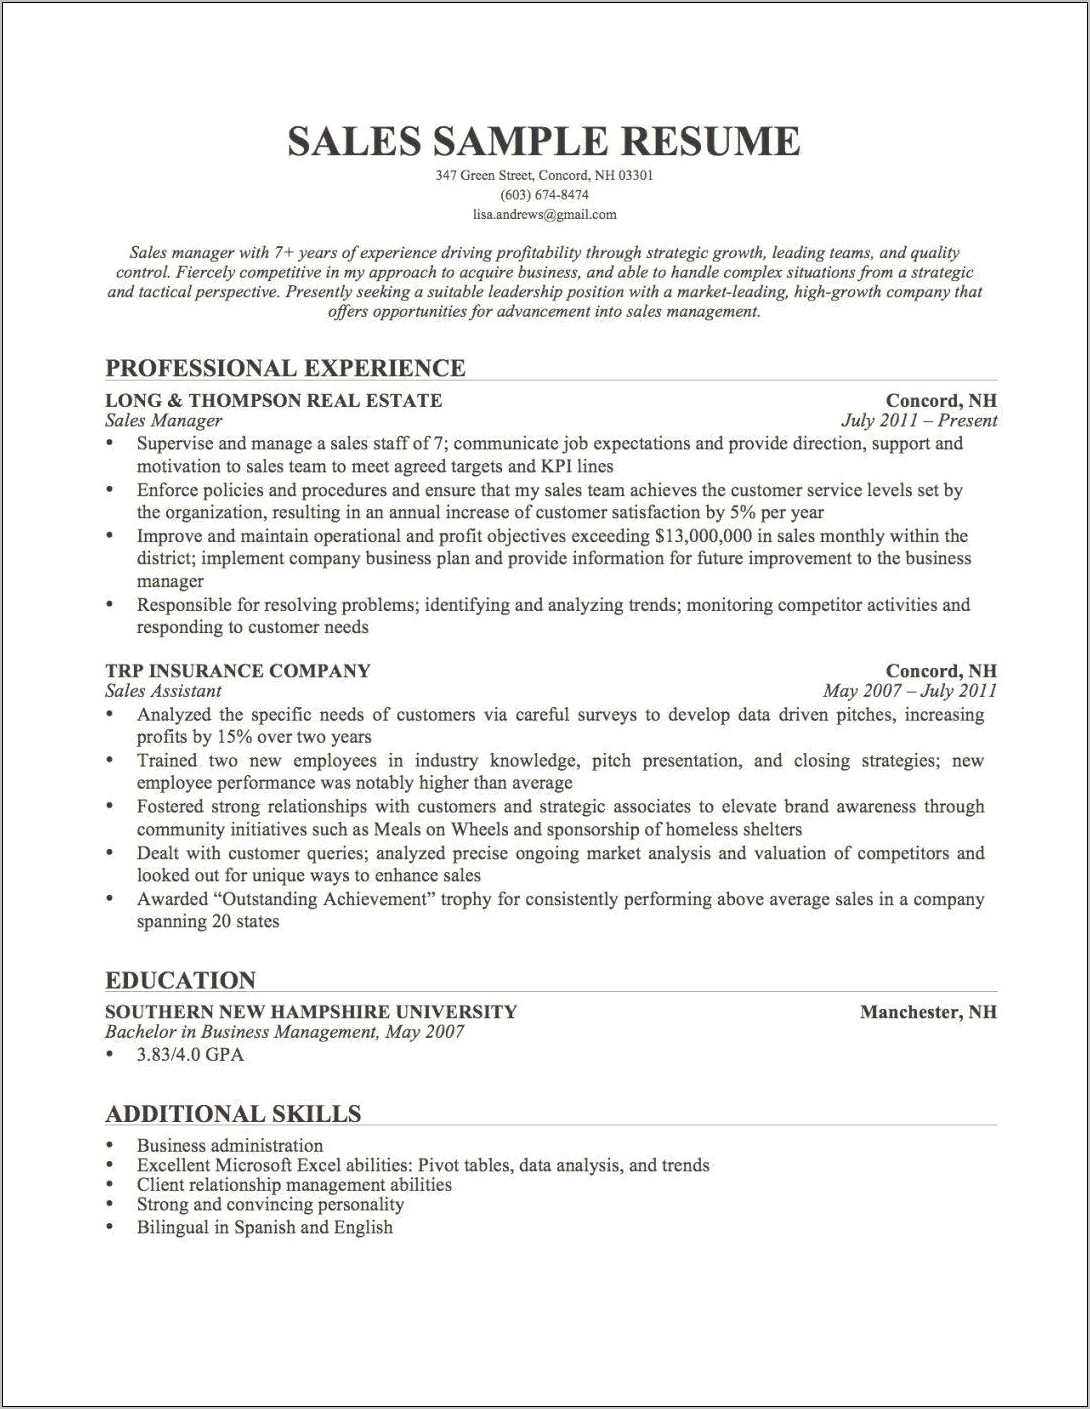 Describing A Management Position On A Resume